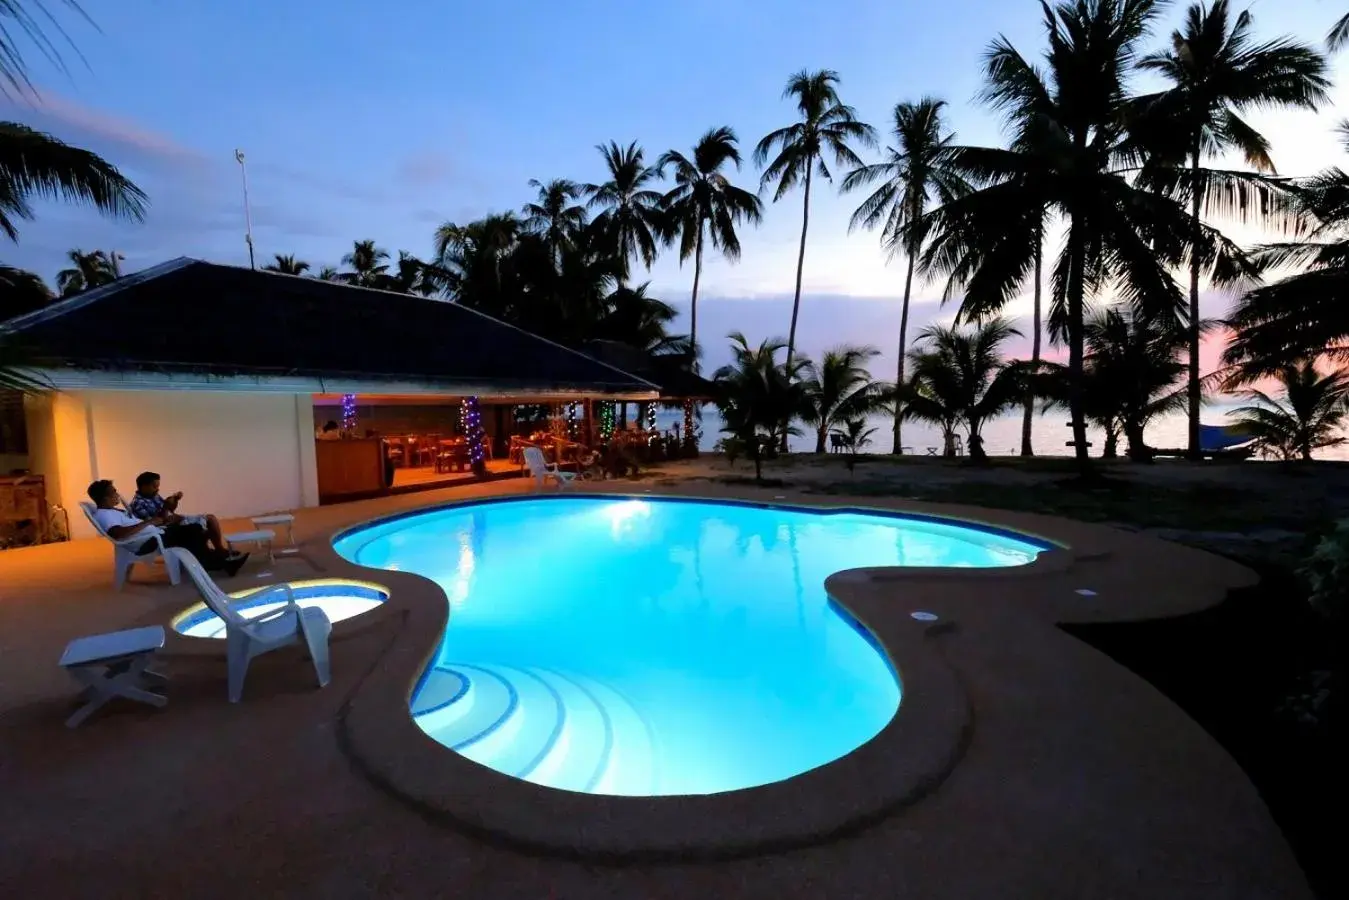 Swimming Pool in White Villas Resort